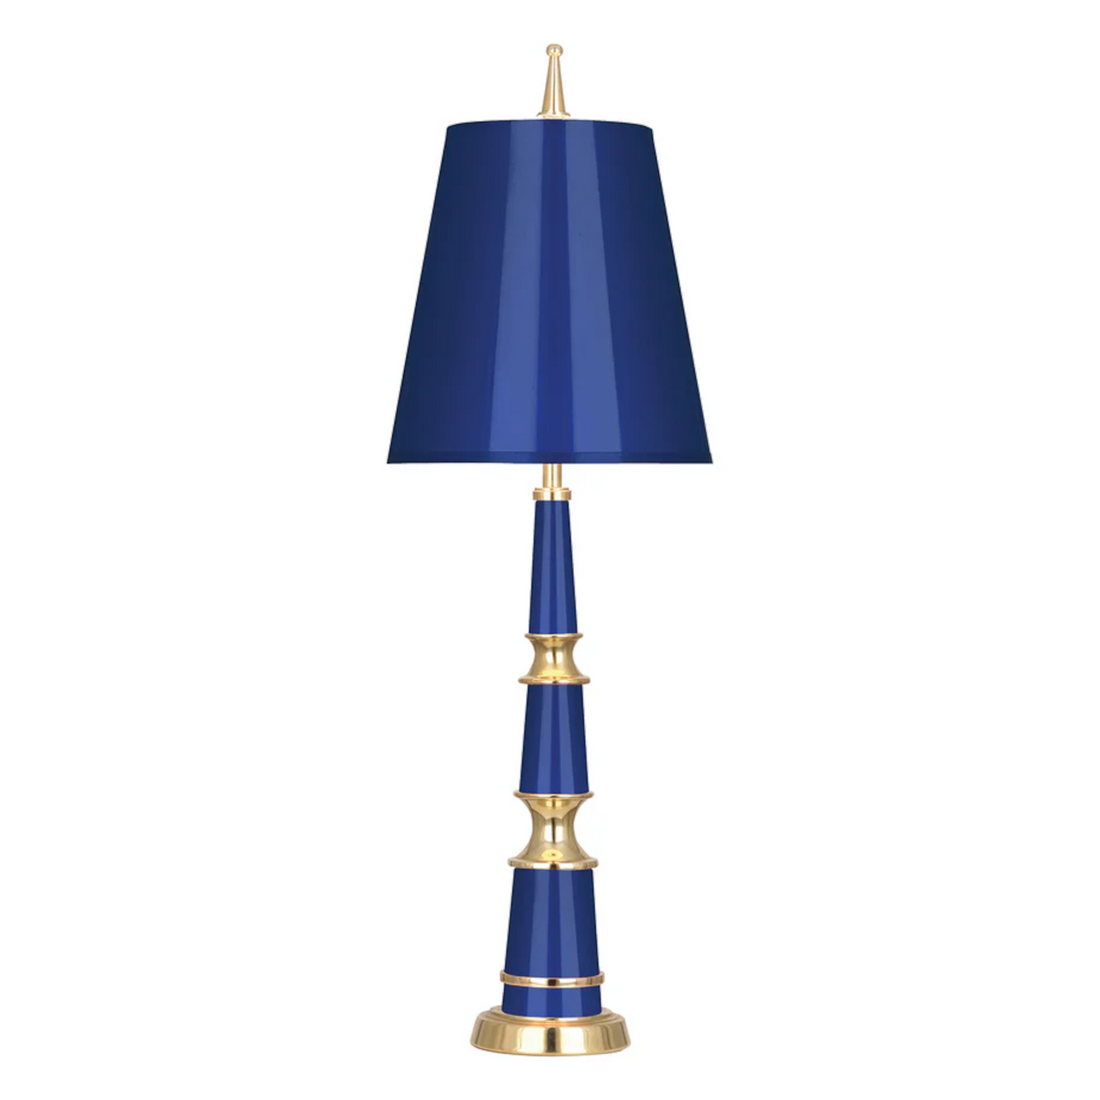 Table lamp VERSAILLES in navy blue